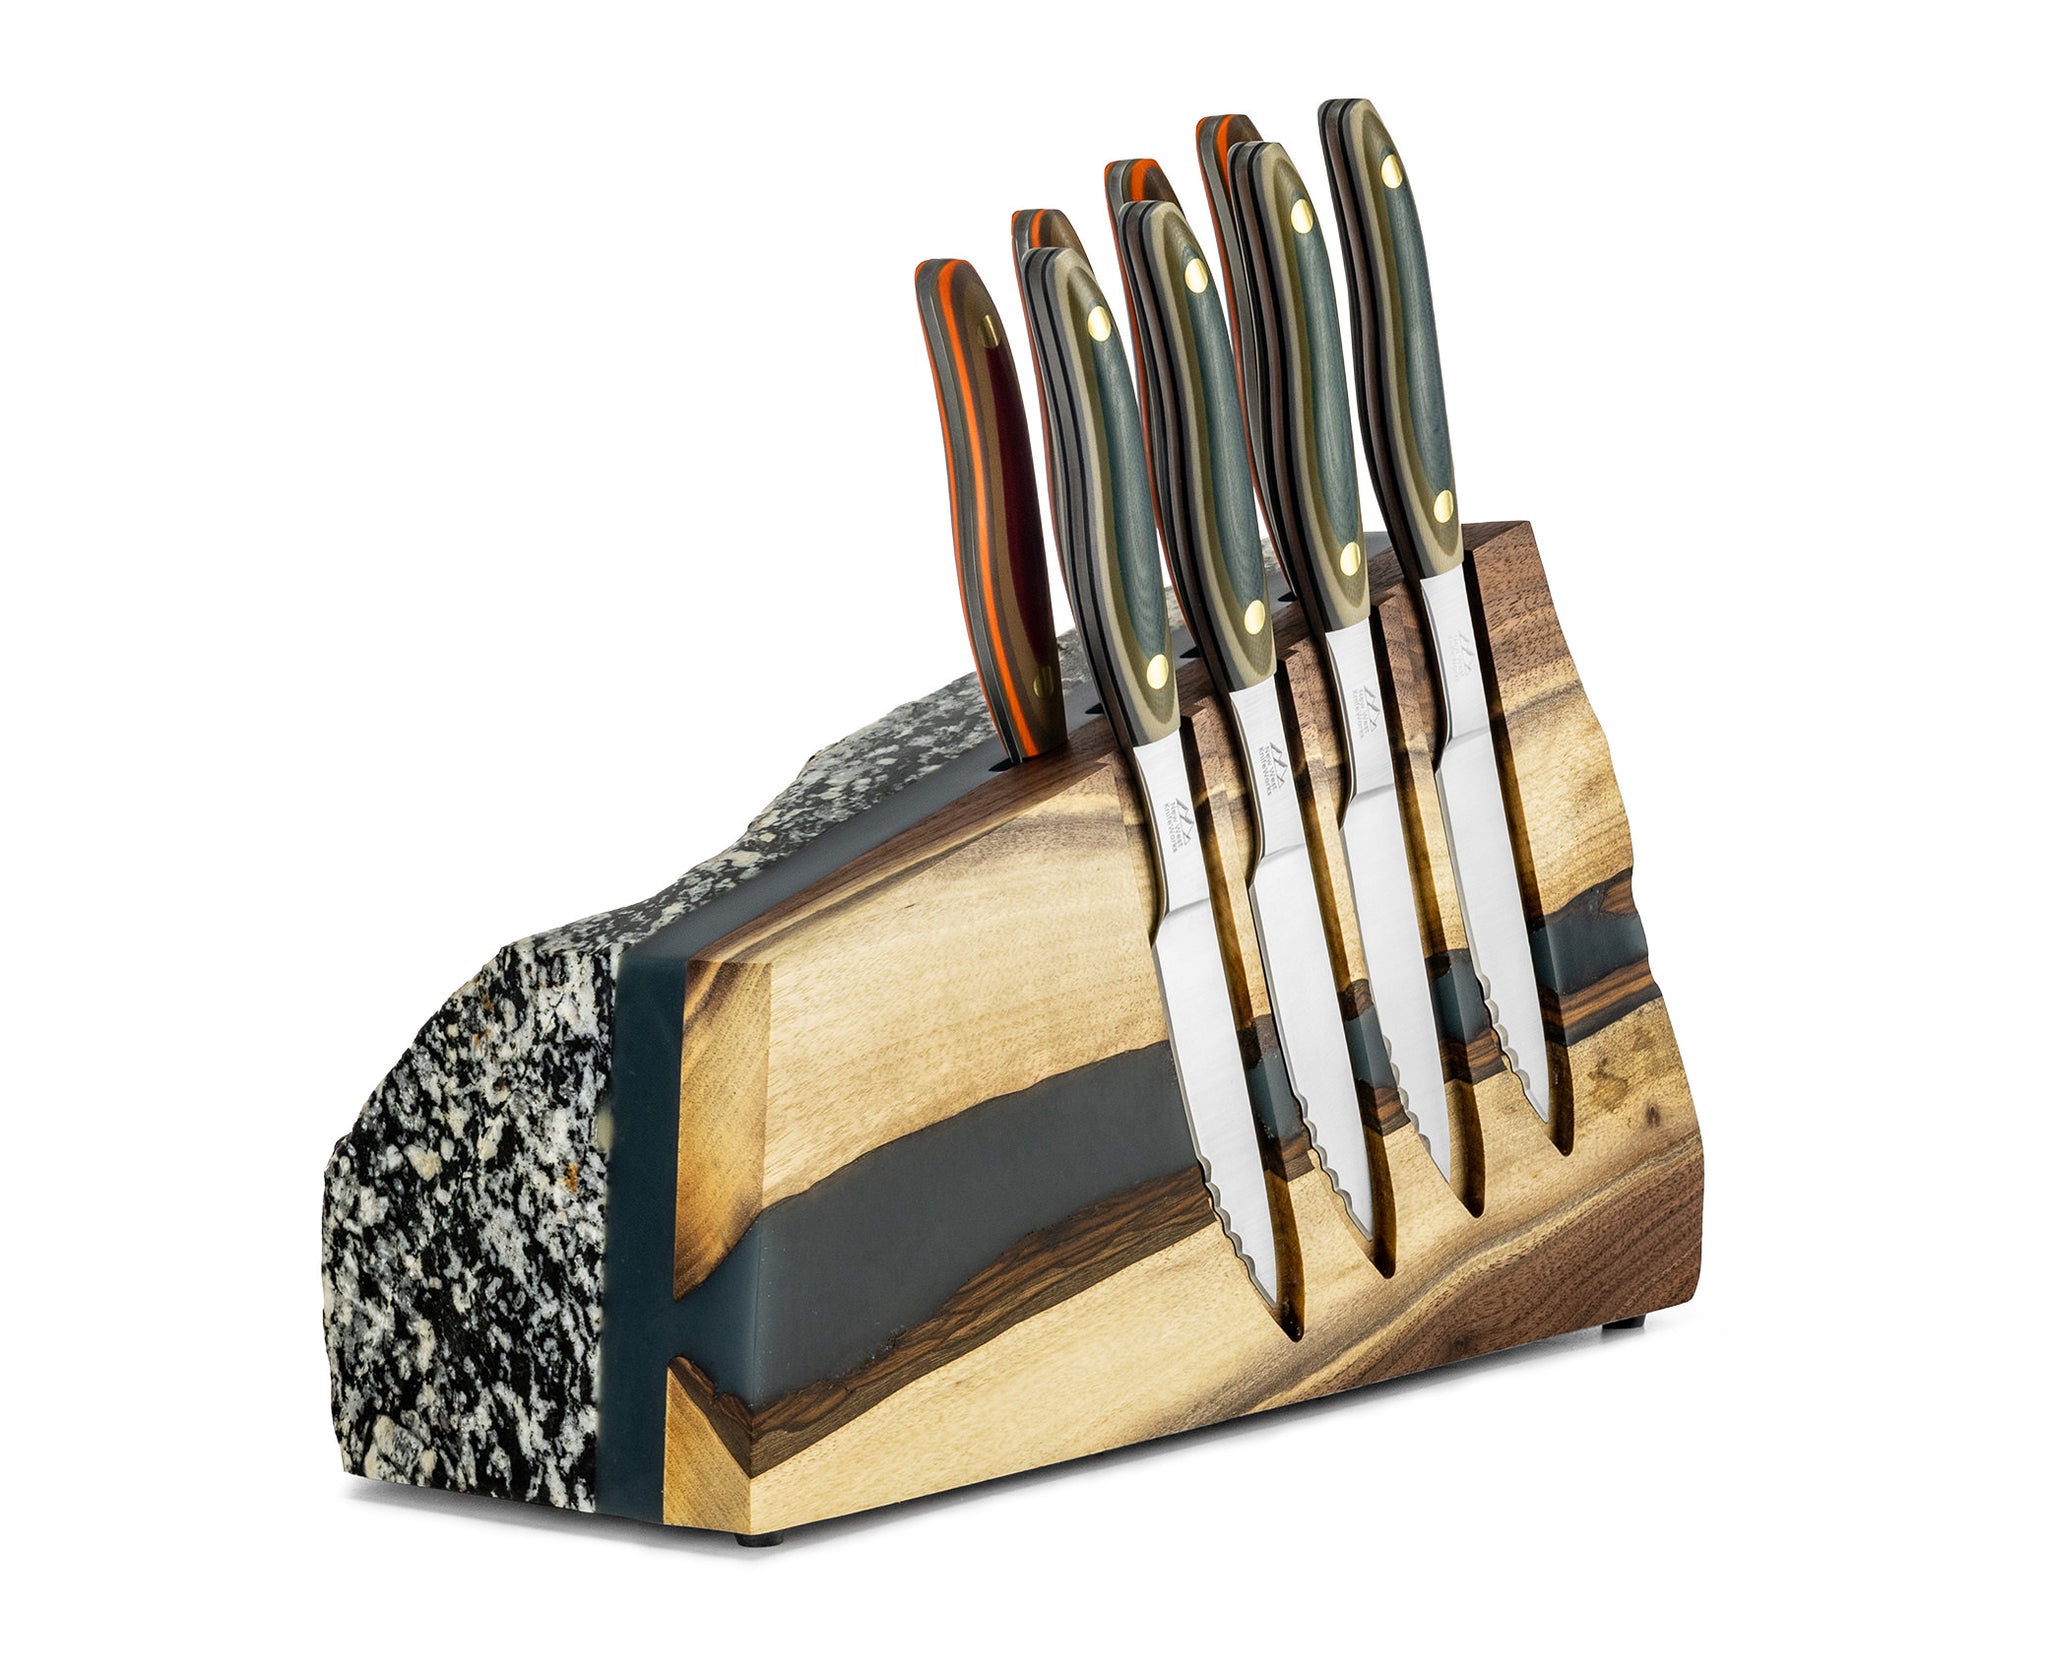 Custom Knife Block by Clark Wood Creations